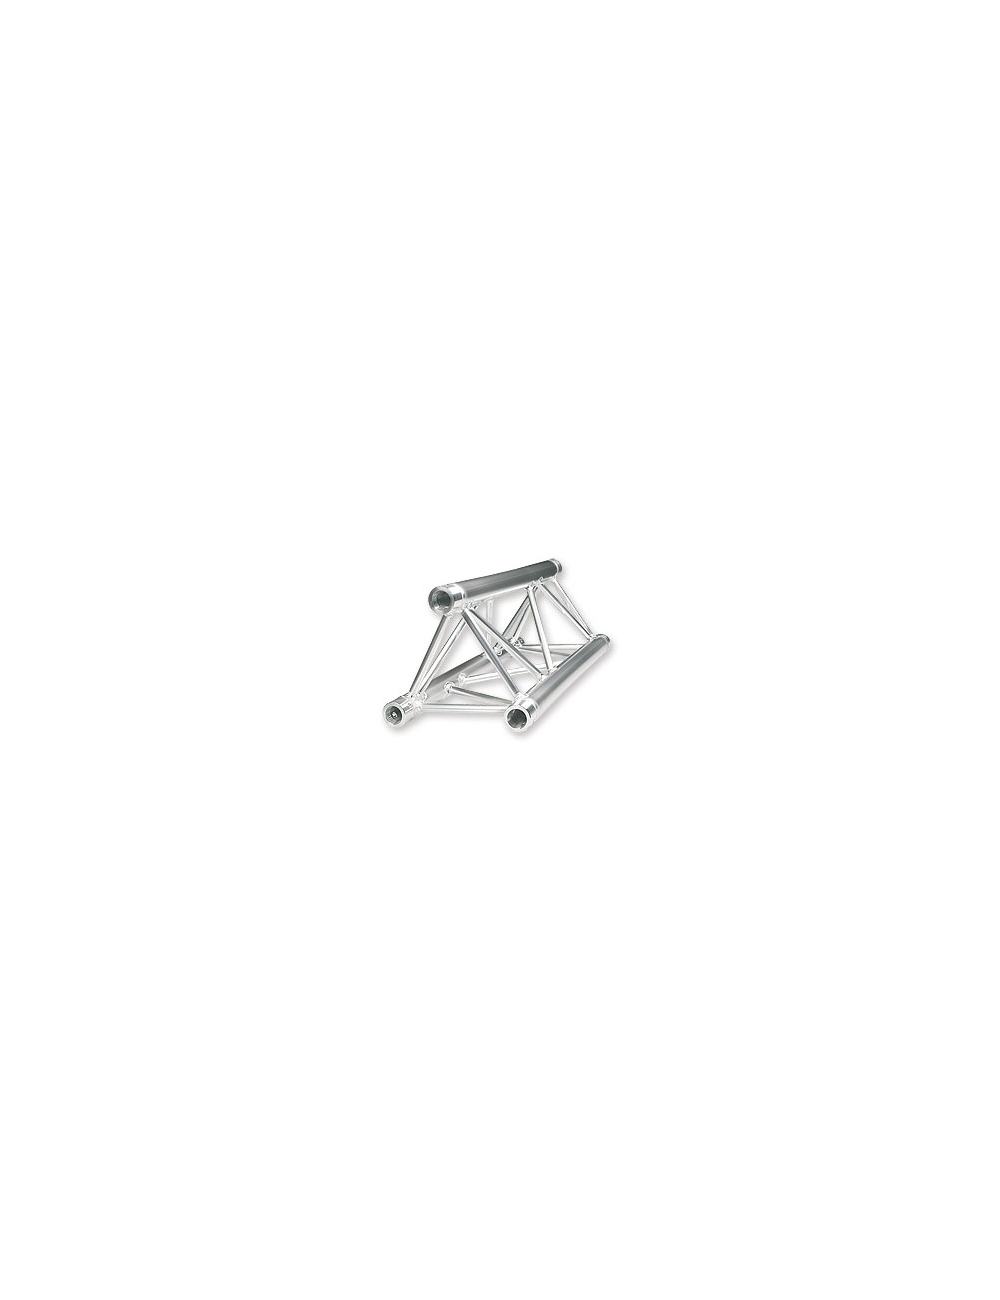 Triangular structure 290 ASD 1m50 - SX29150